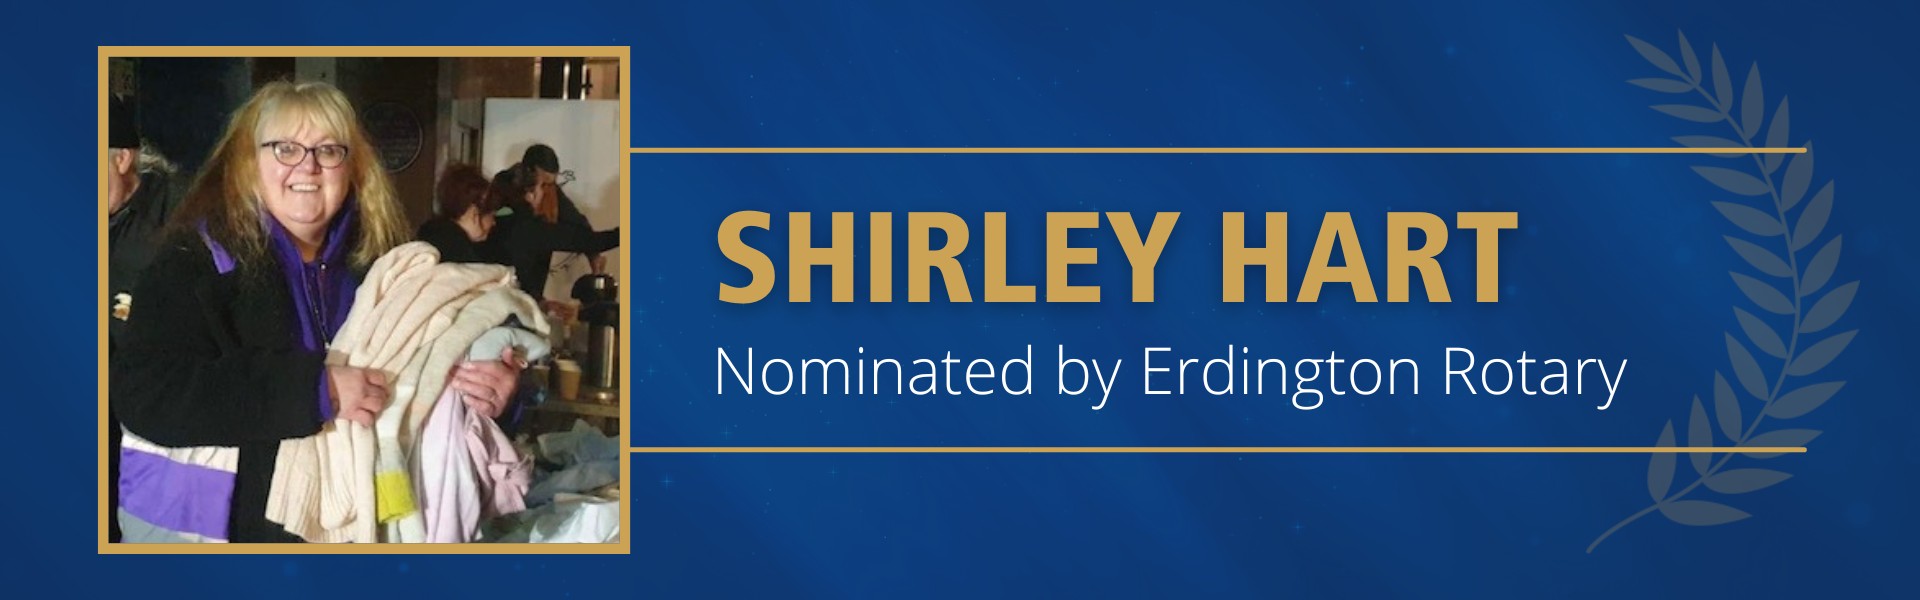 Shirley Hart Nominated by Erdington Rotary